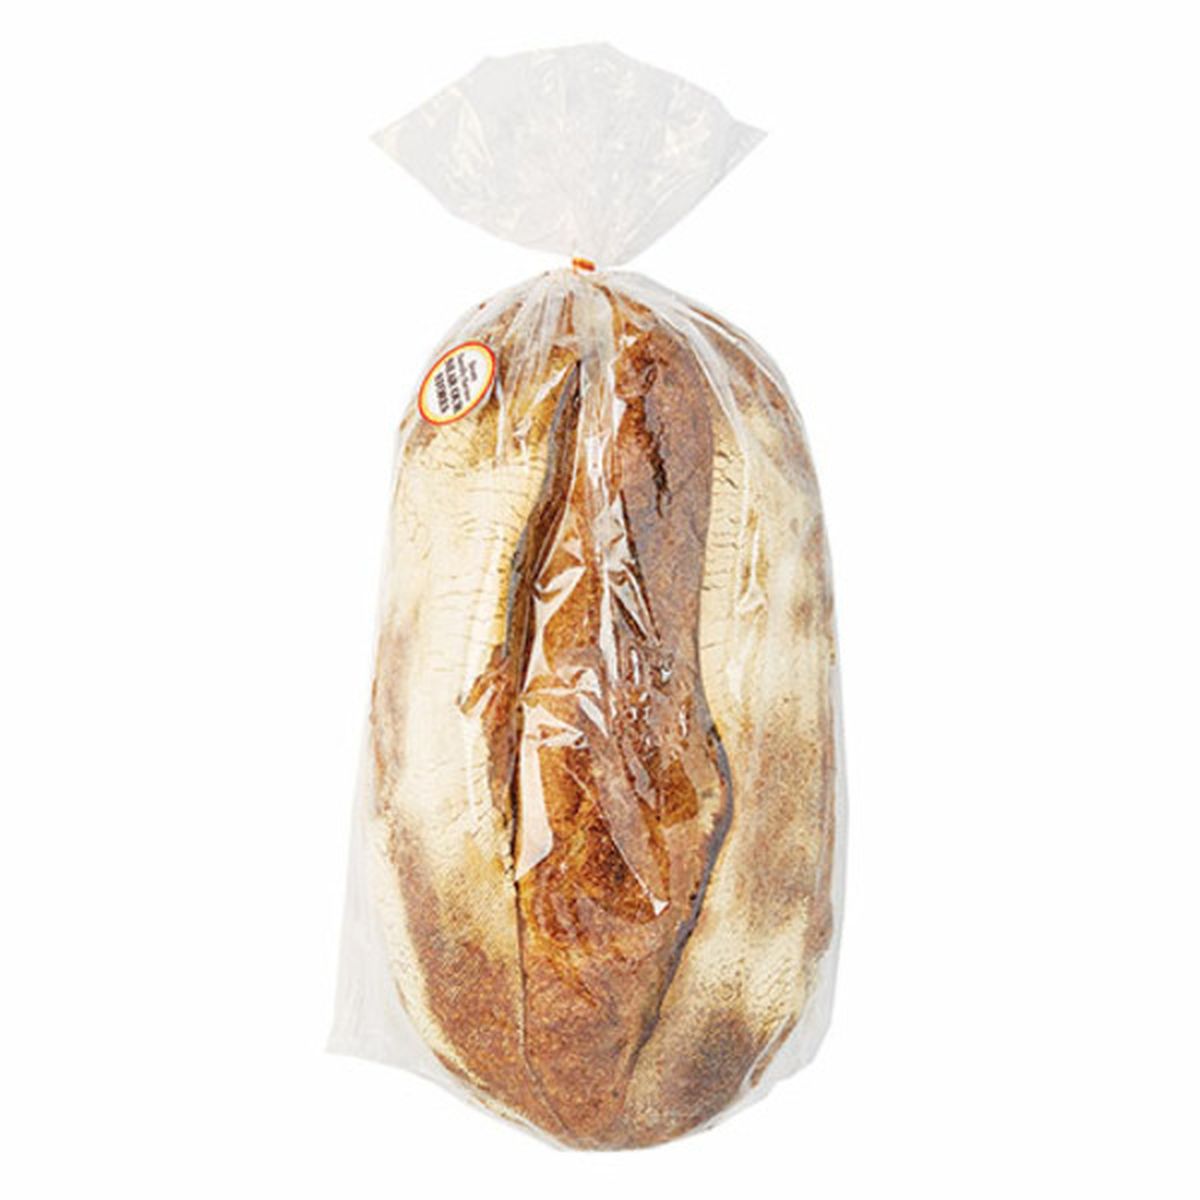 Calories in Wegmans Organic White Sourdough Bread